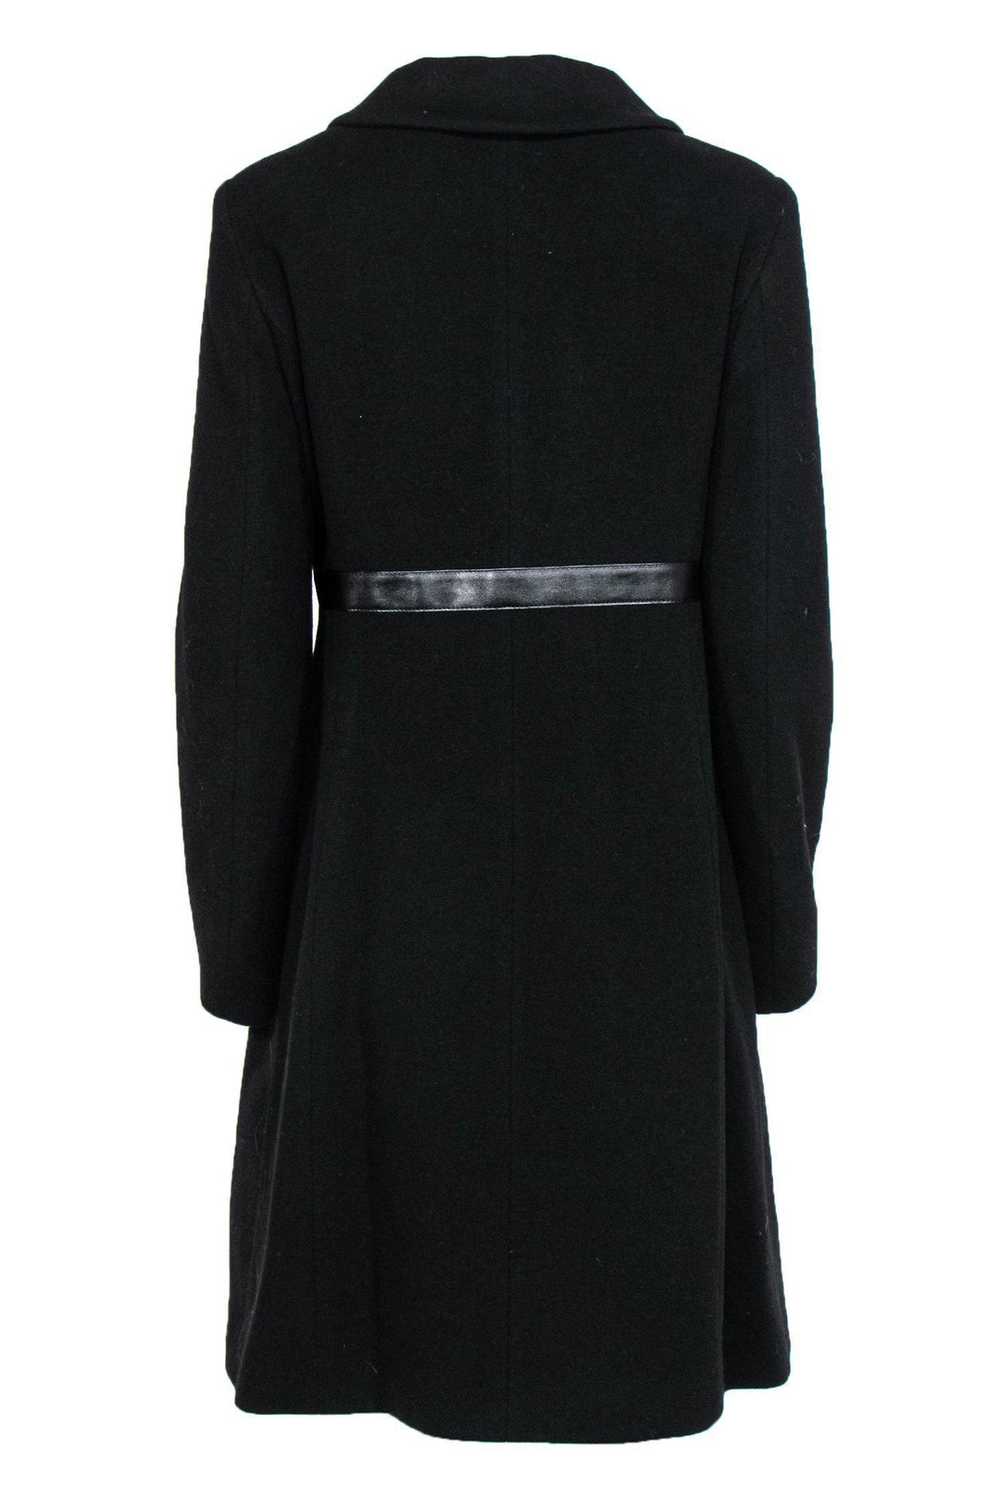 Cinzia Rocca - Black Wool Overcoat w/ Leather Tri… - image 3